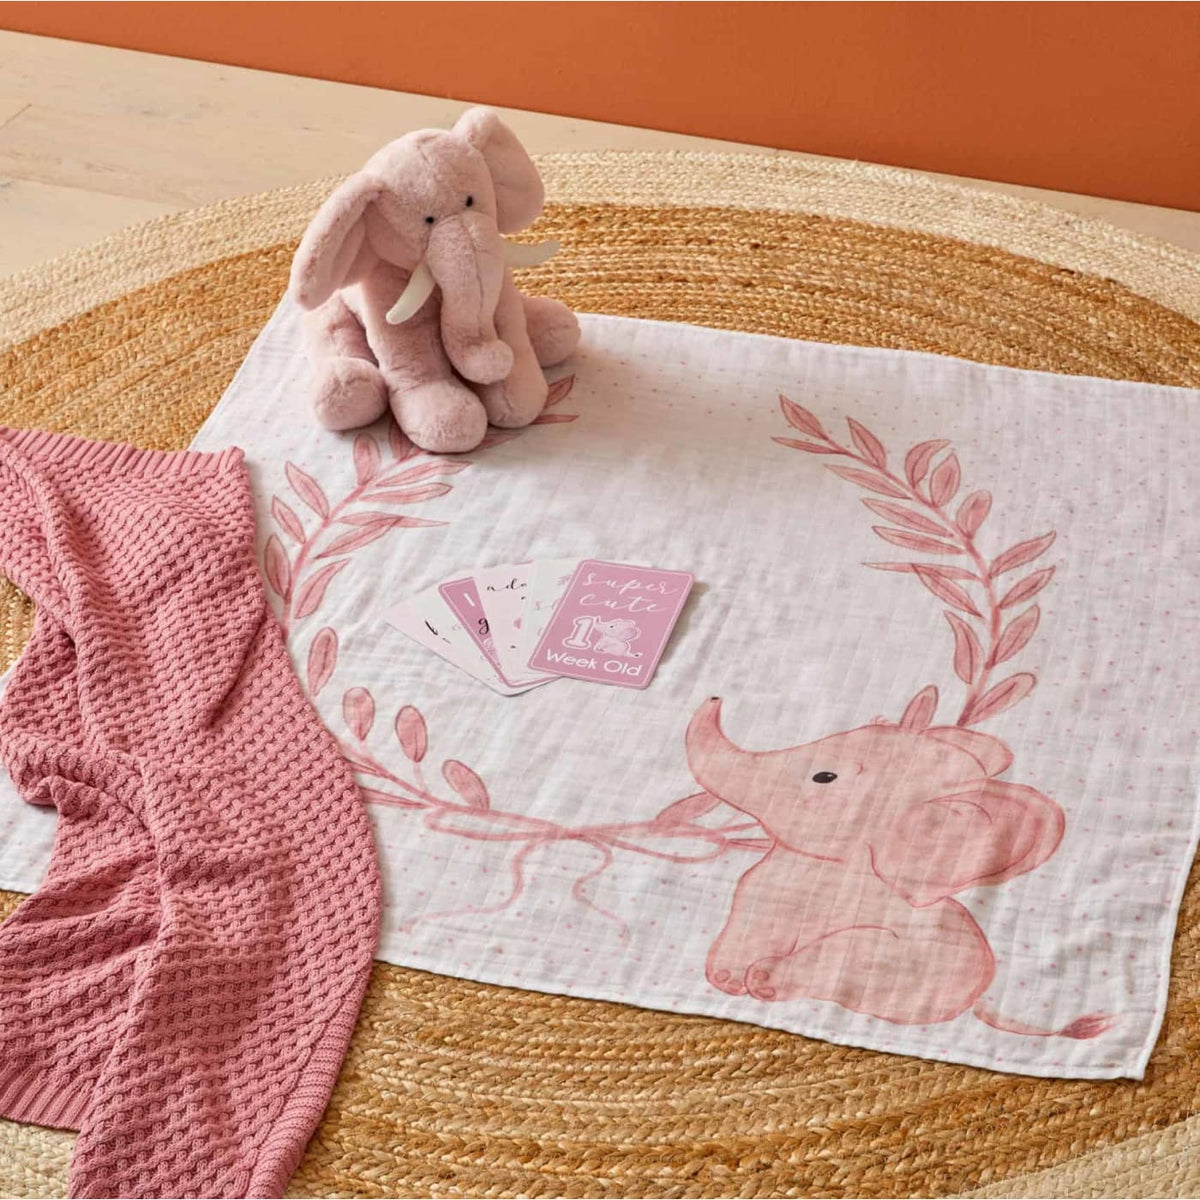 Jiggle &amp; Giggle Milestone Cotton Muslin &amp; Baby Photo Cards - Pink Elephant - Pink Elephant - GIFTWARE - MILESTONE BLOCKS/CARDS